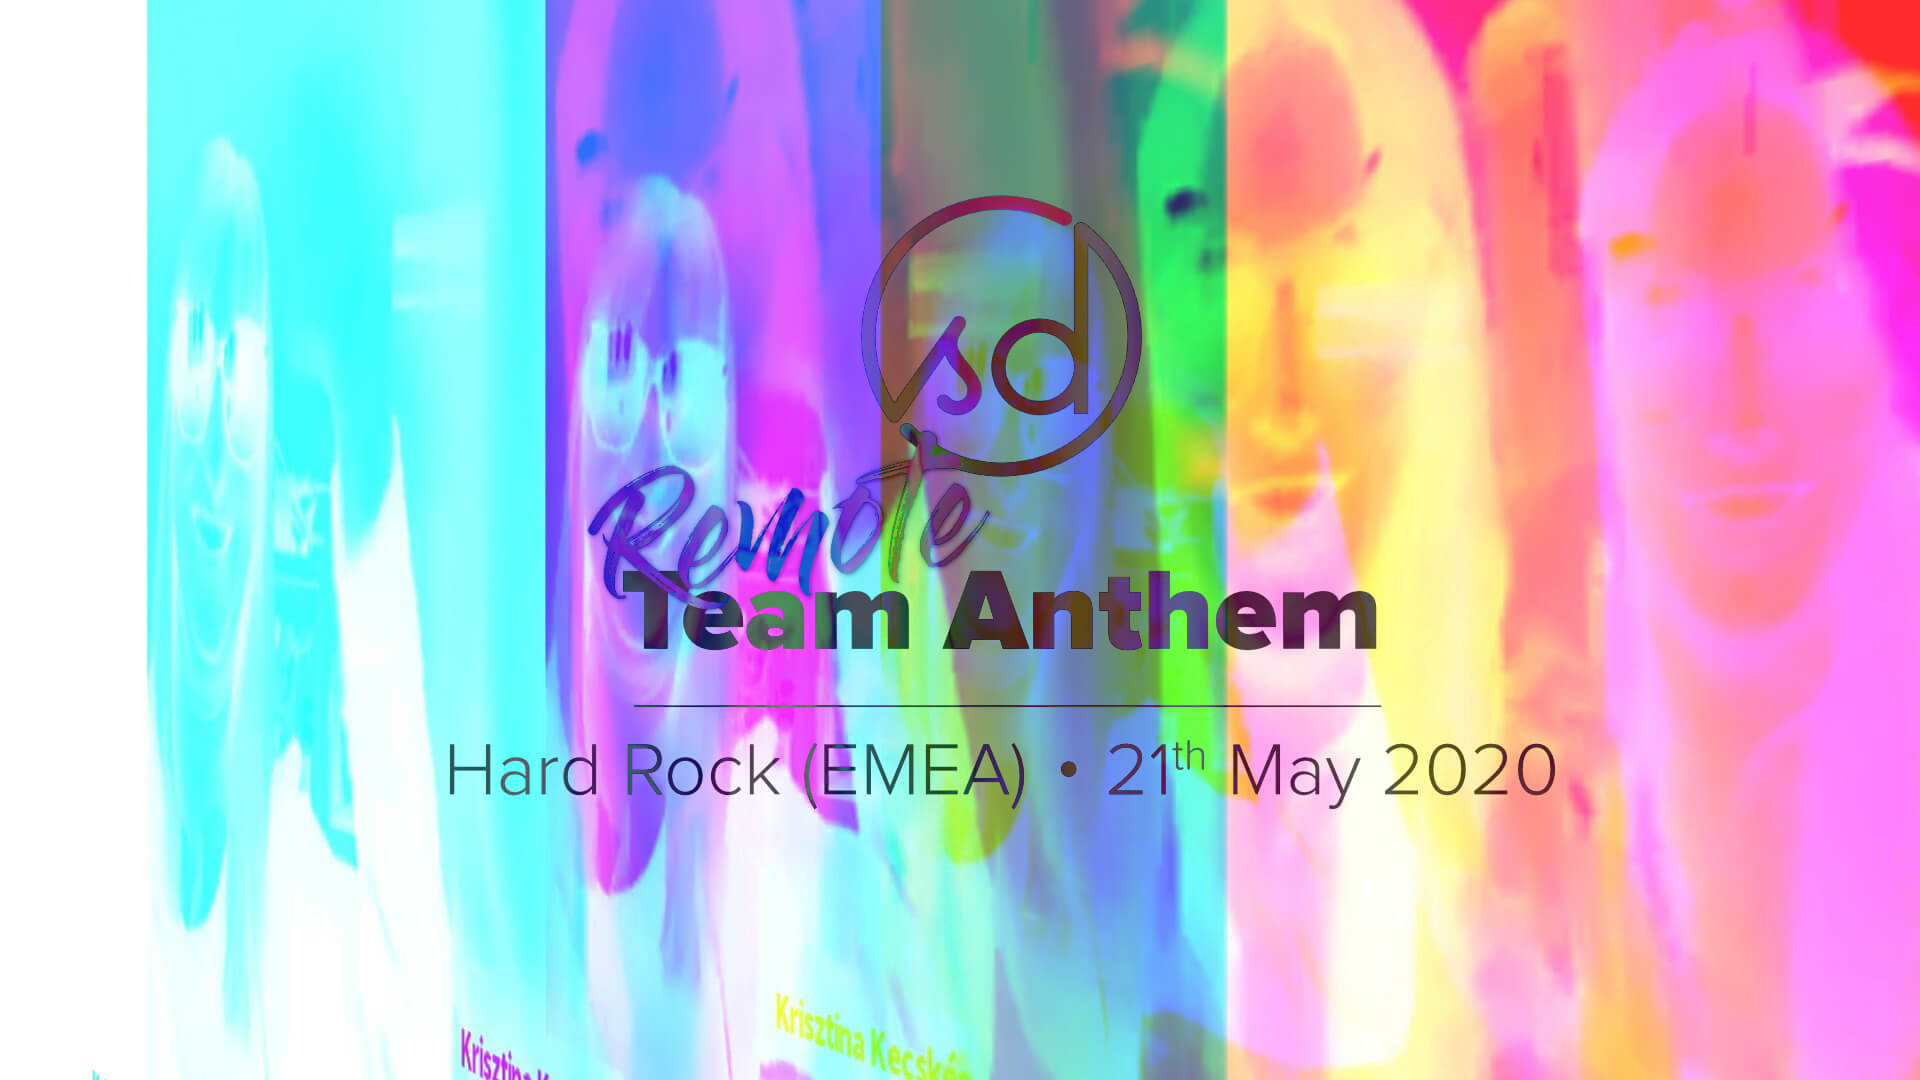 Hard Rock (EMEA) + Remote Team Anthem